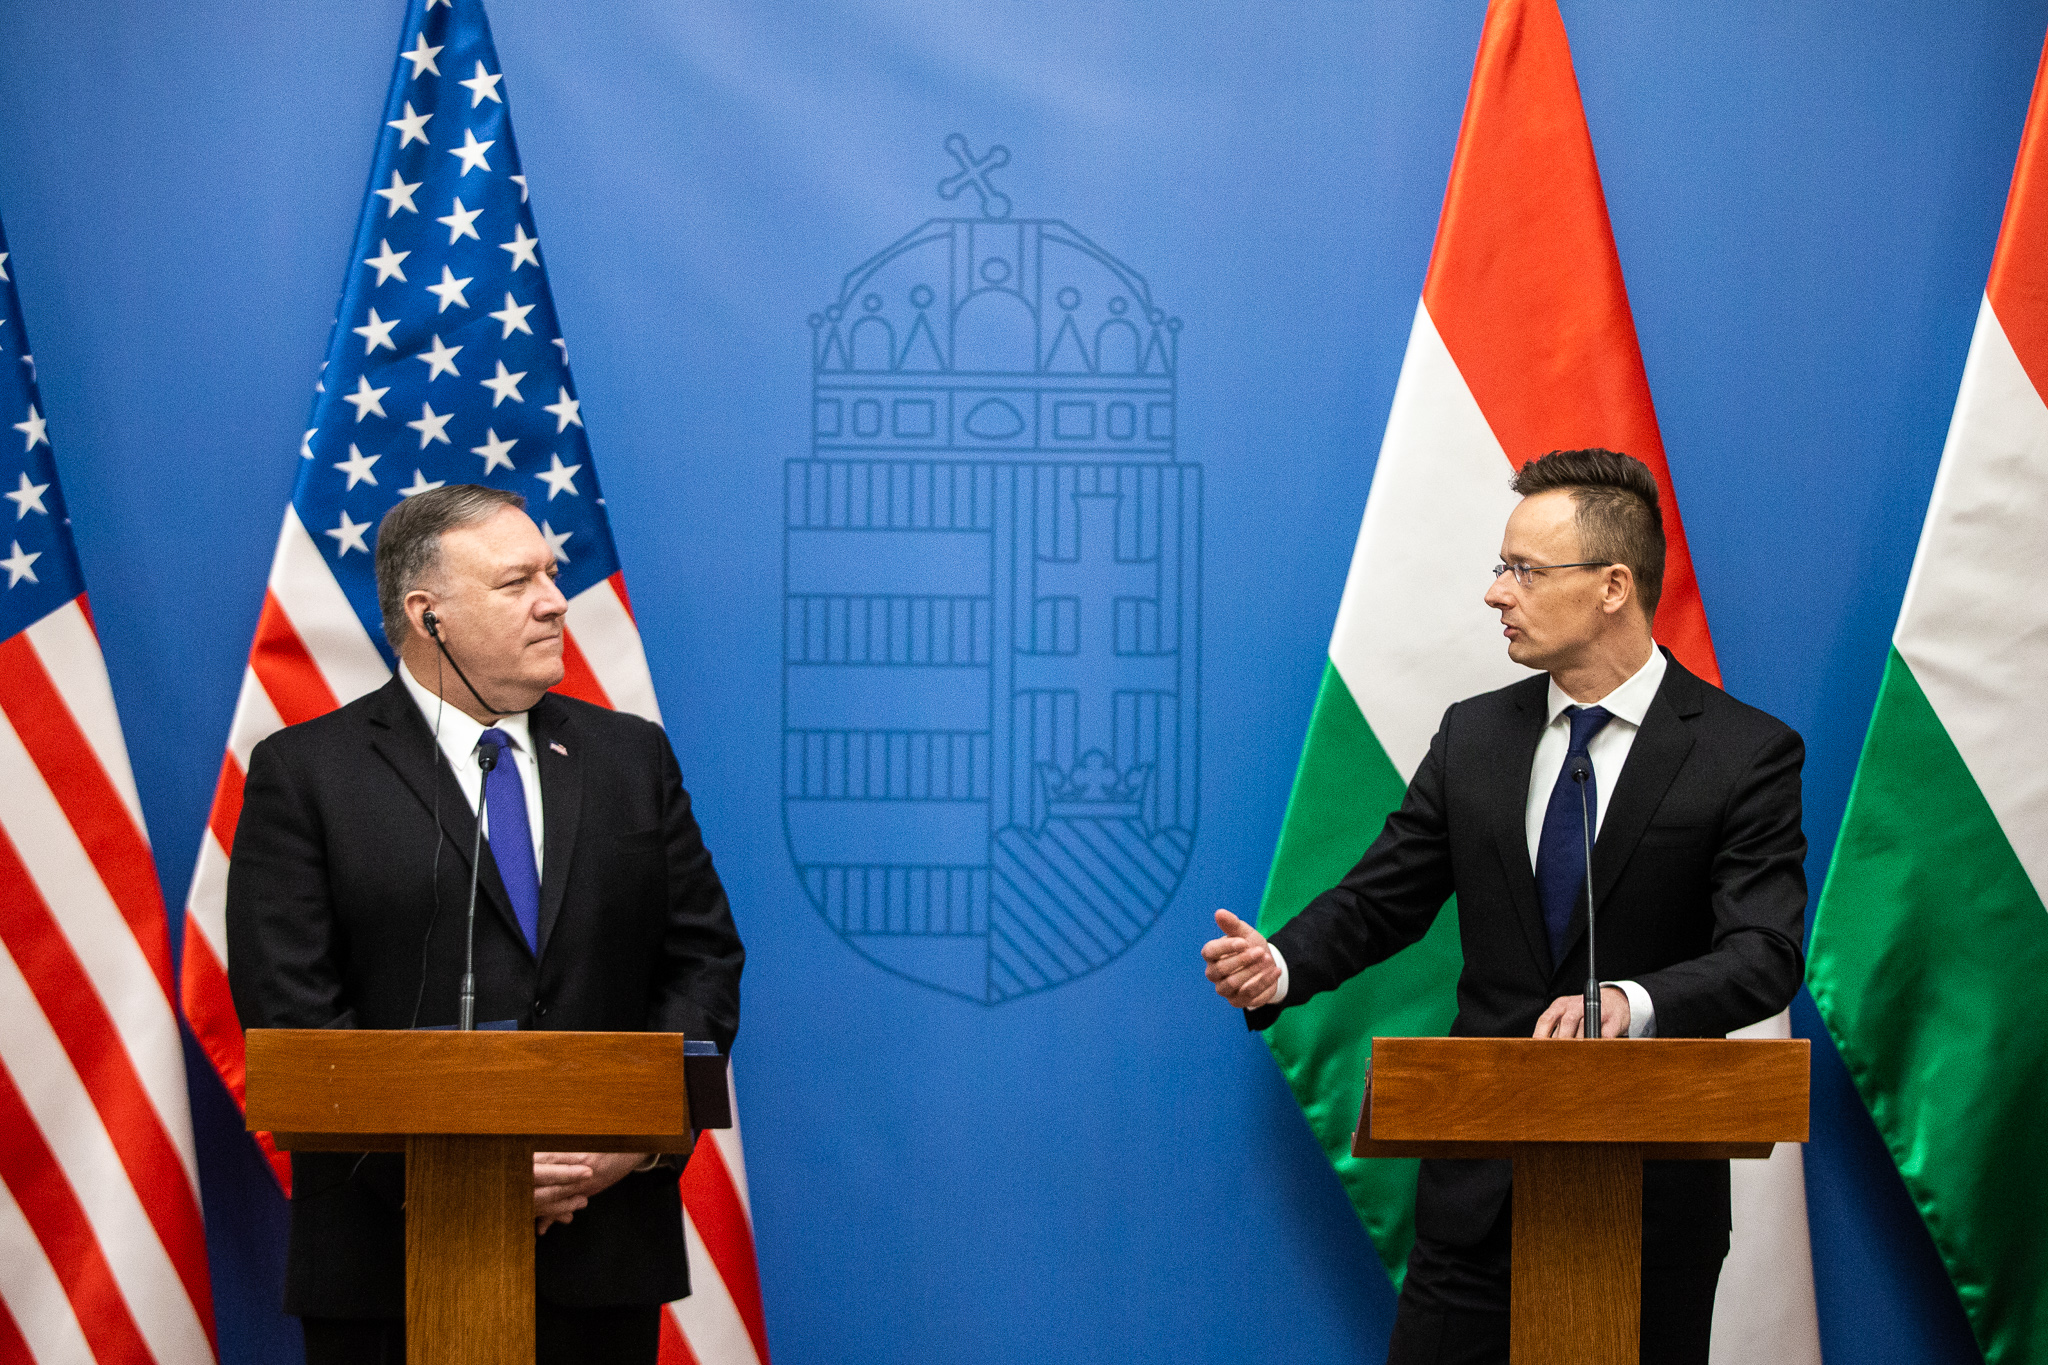 Orbán enged az USA-nak